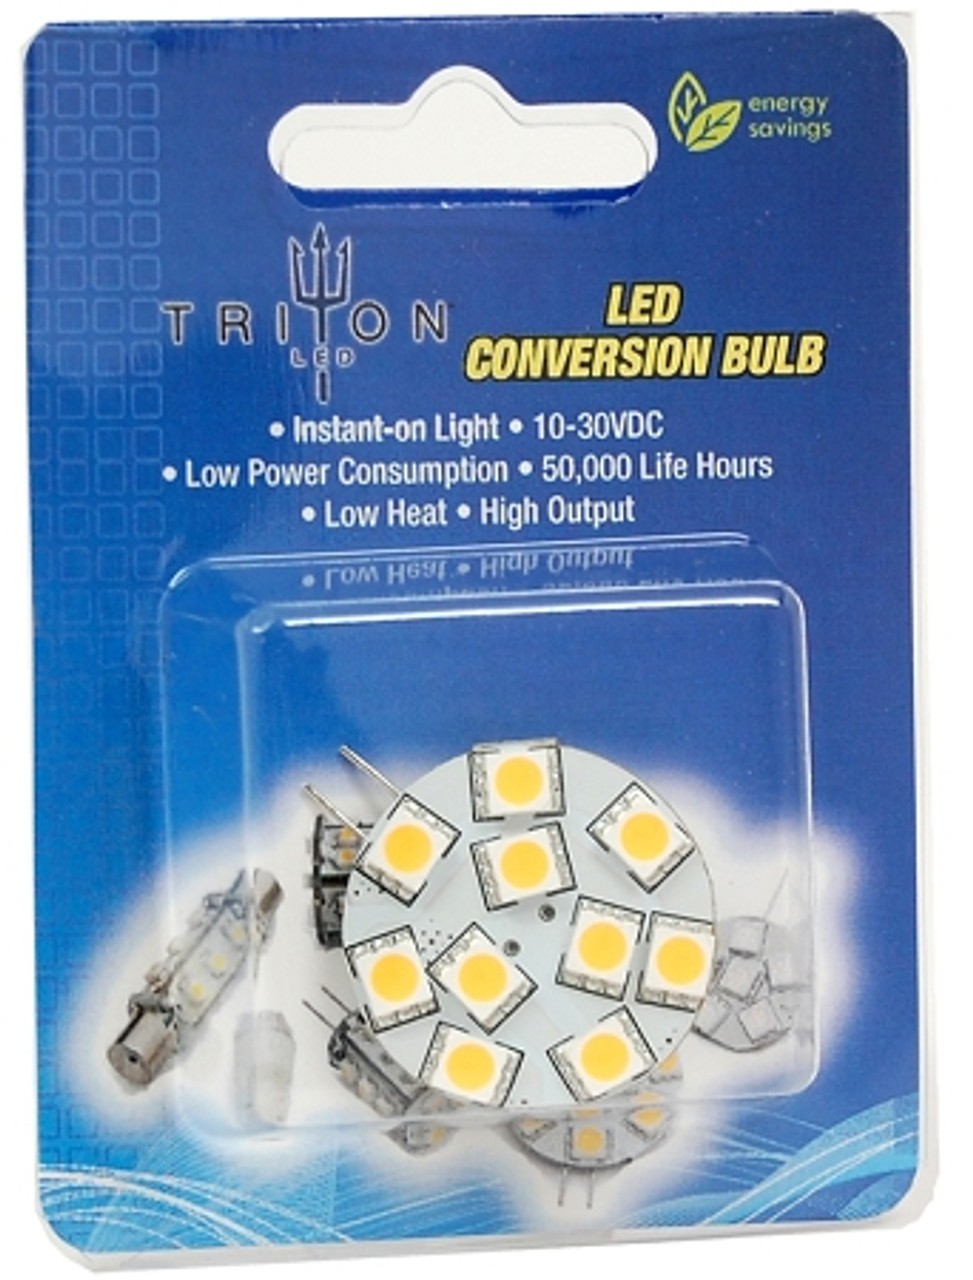 TritonLED 2.2W LED Bulb G4 Side-Pin LED Bulb Replacement